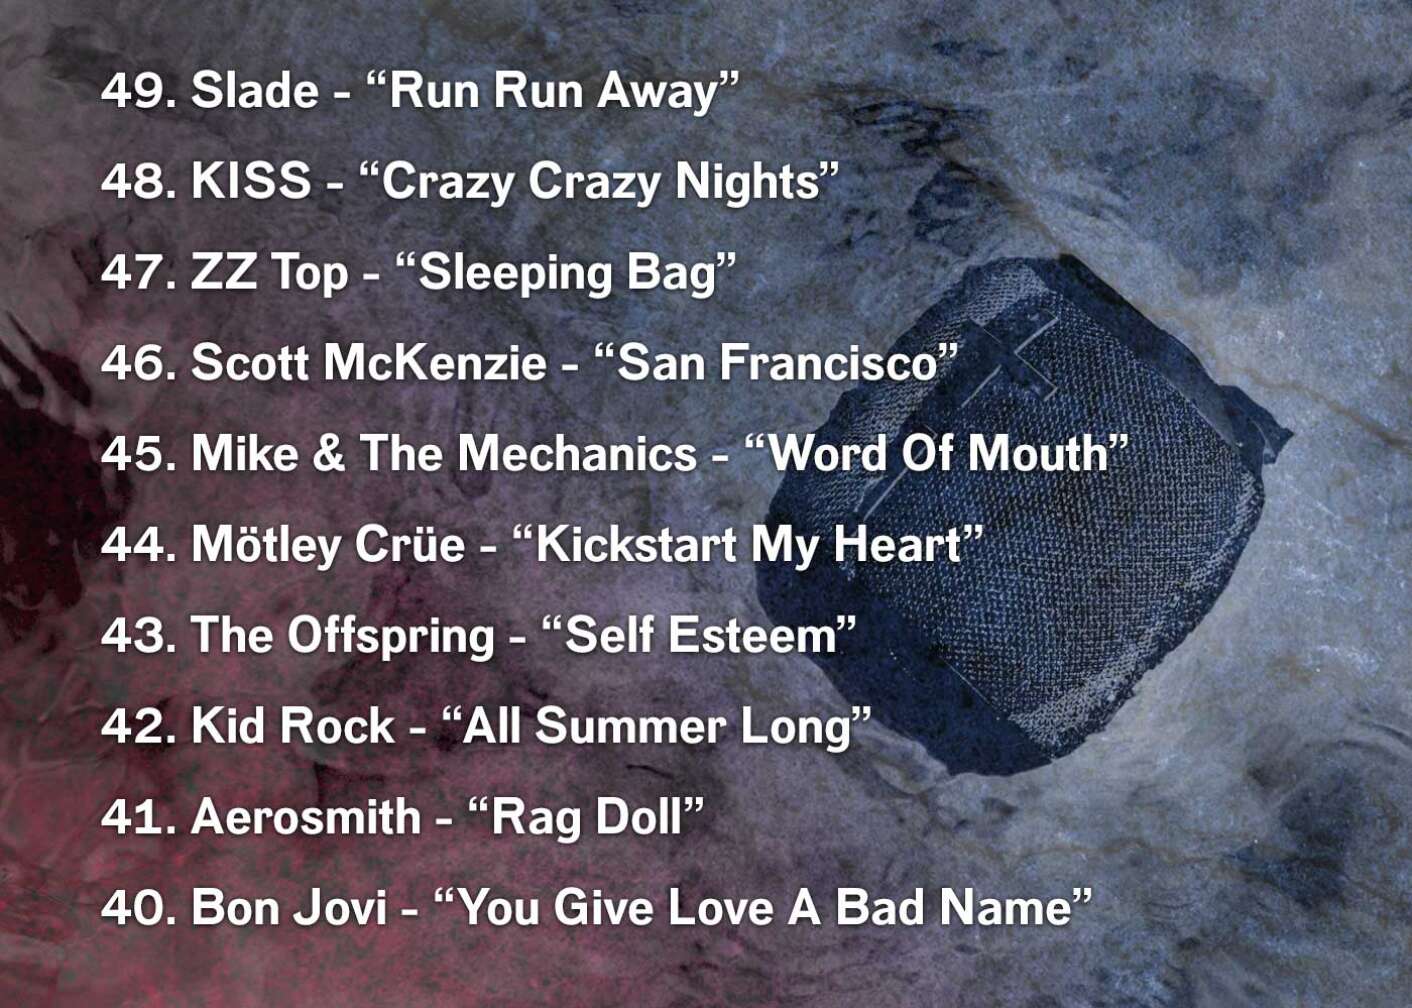 49. Slade - “Run Run Away” 48. KISS - “Crazy Crazy Nights” 47. ZZ Top - “Sleeping Bag” 46. Scott McKenzie - “San Francisco” 45. Mike & The Mechanics - “Word Of Mouth” 44. Mötley Crüe - “Kickstart My Heart” 43. The Offspring - “Self Esteem” 42. Kid Rock - “All Summer Long” 41. Aerosmith - “Rag Doll” 40. Bon Jovi - “You Give Love A Bad Name”